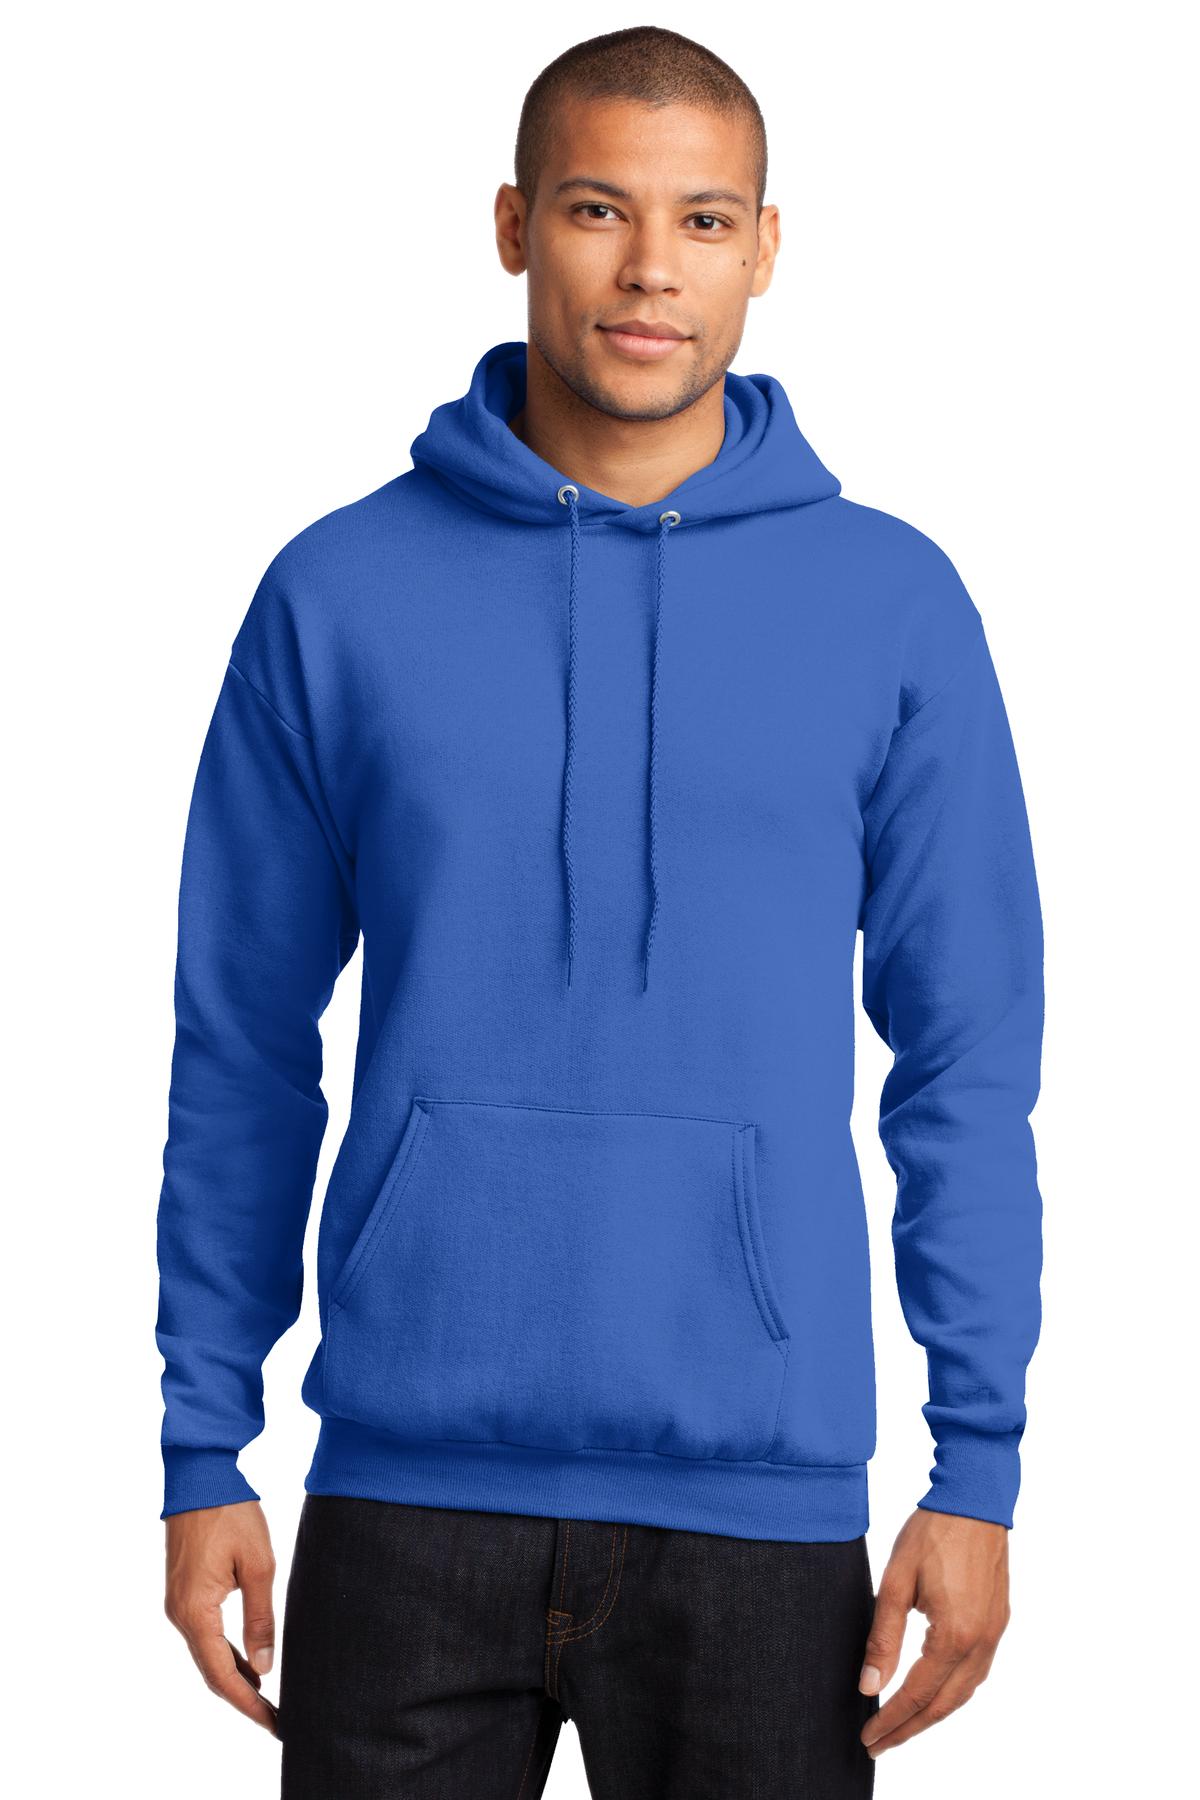 Port & Company® - Core Fleece Pullover Hooded Sweatshirt. PC78H [Royal] - DFW Impression